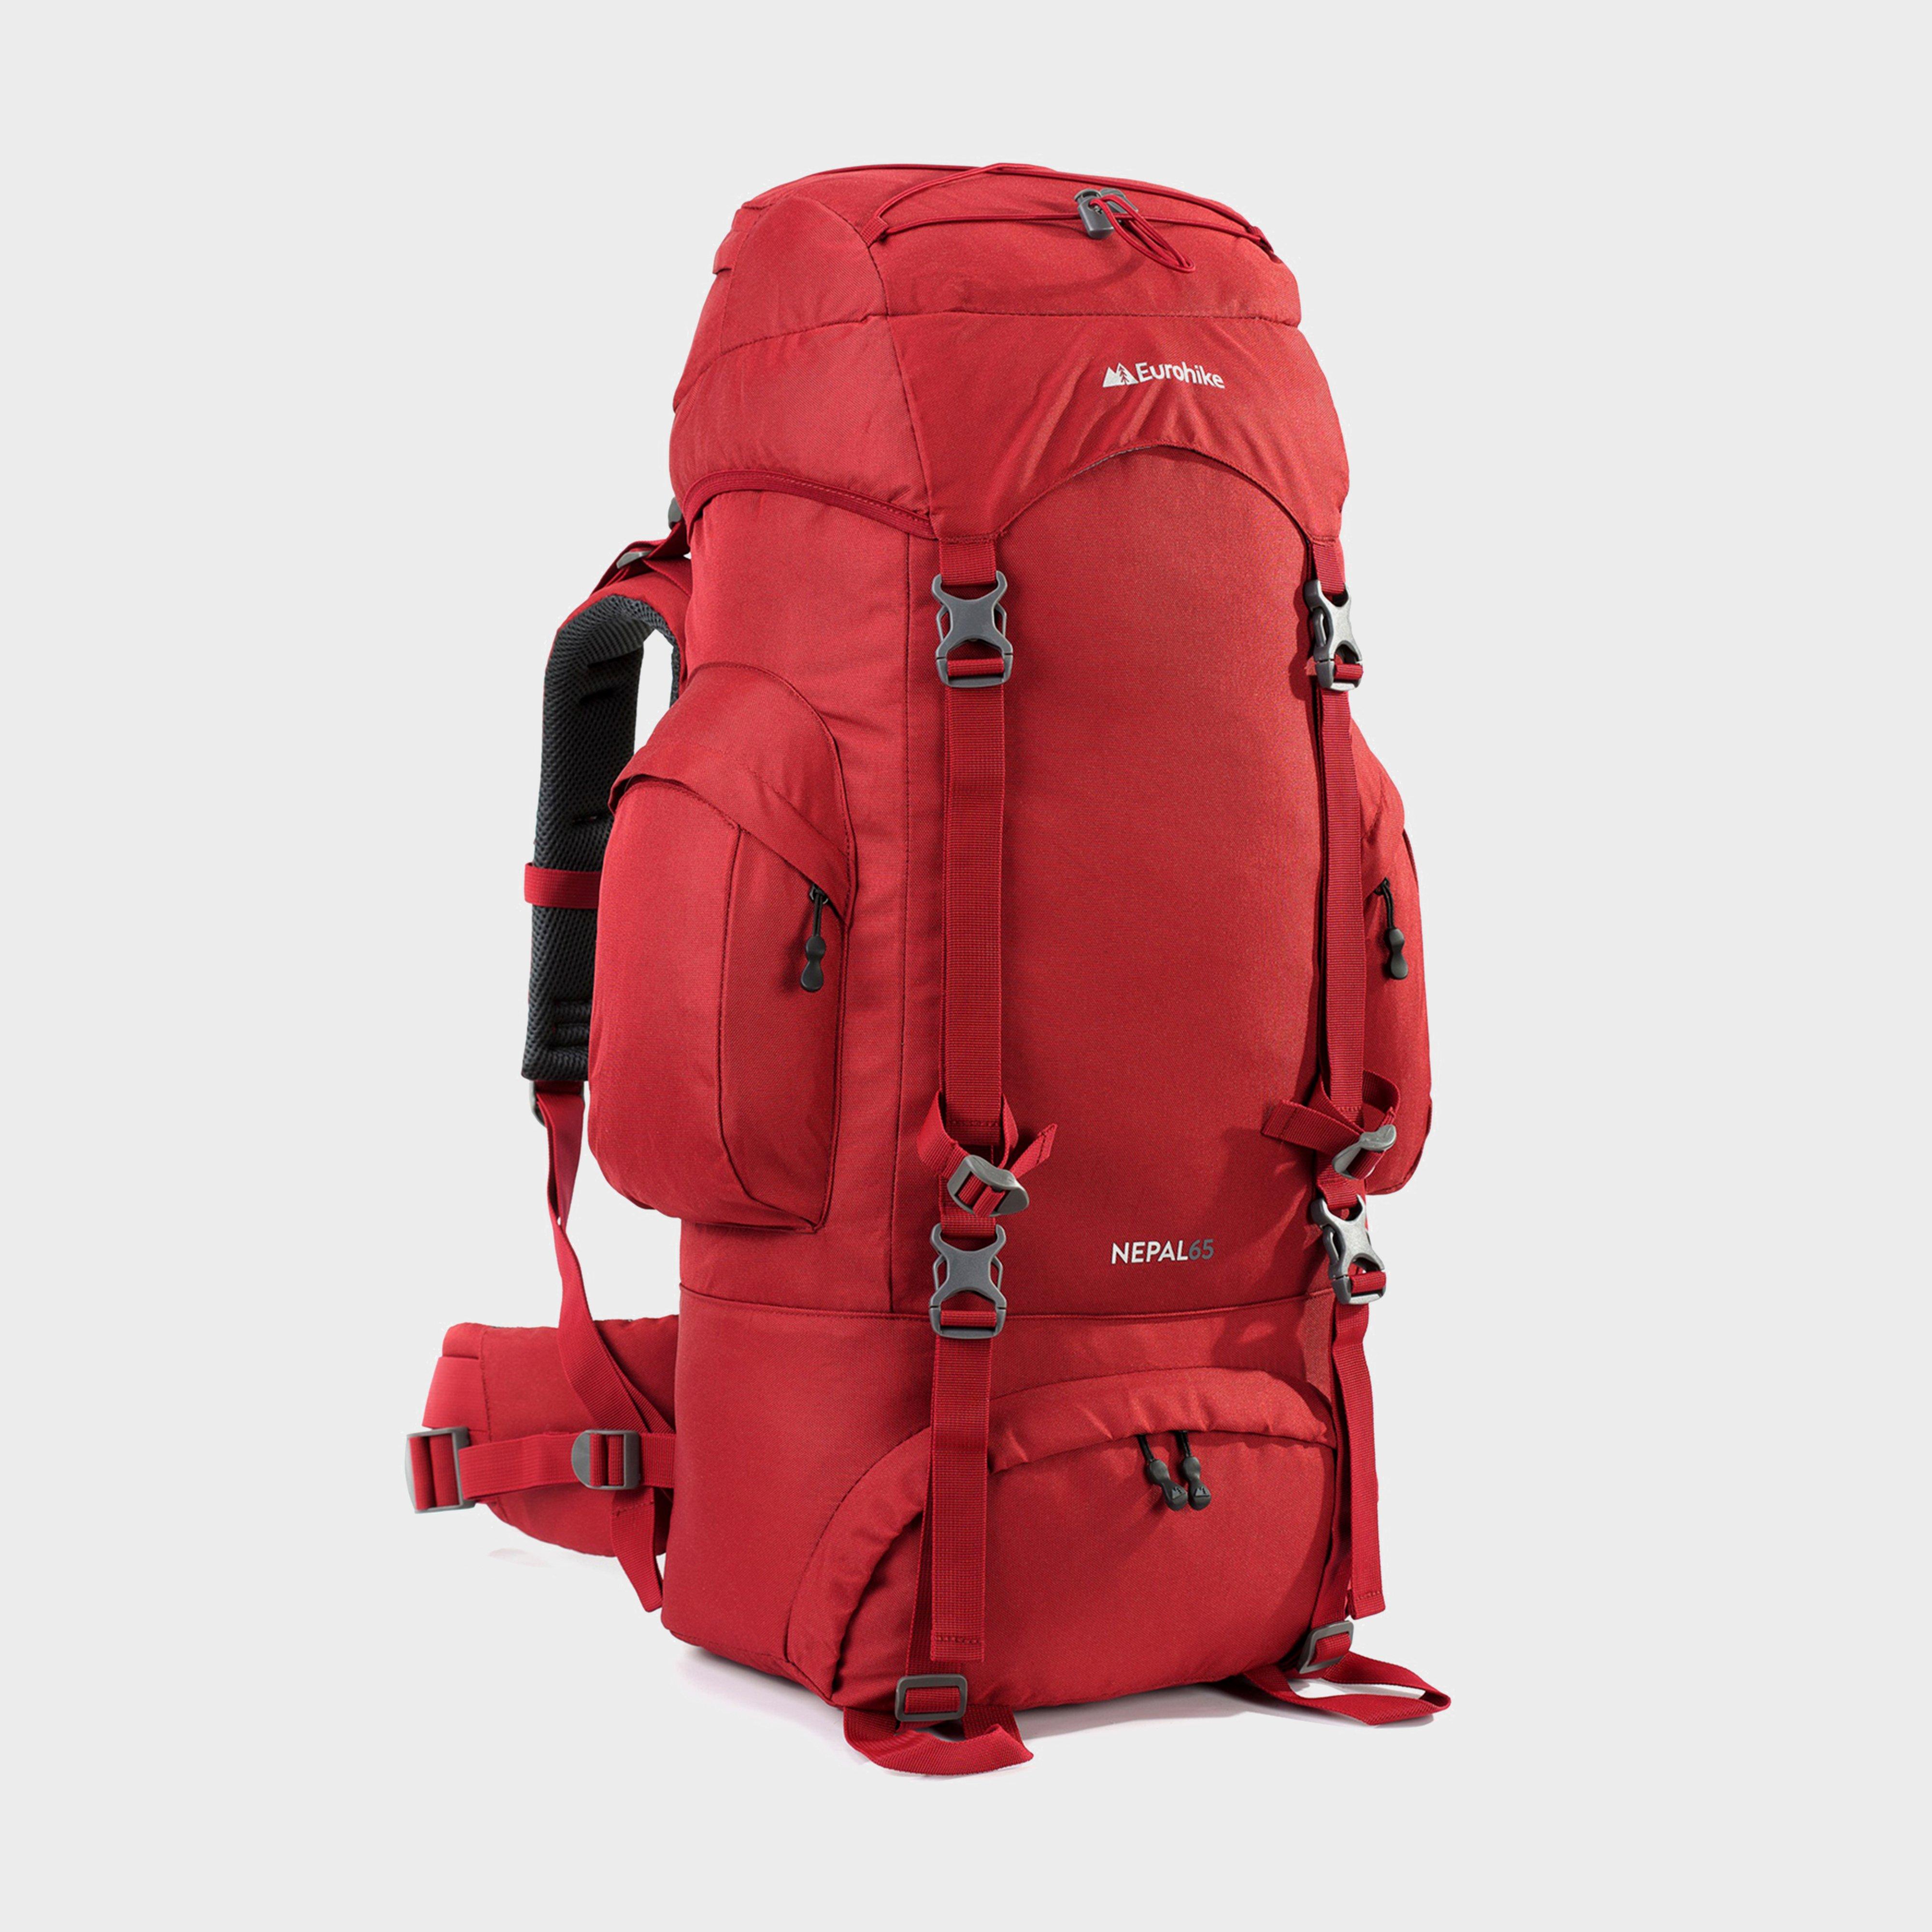 Eurohike Nepal 65 Rucksack - Red, RED